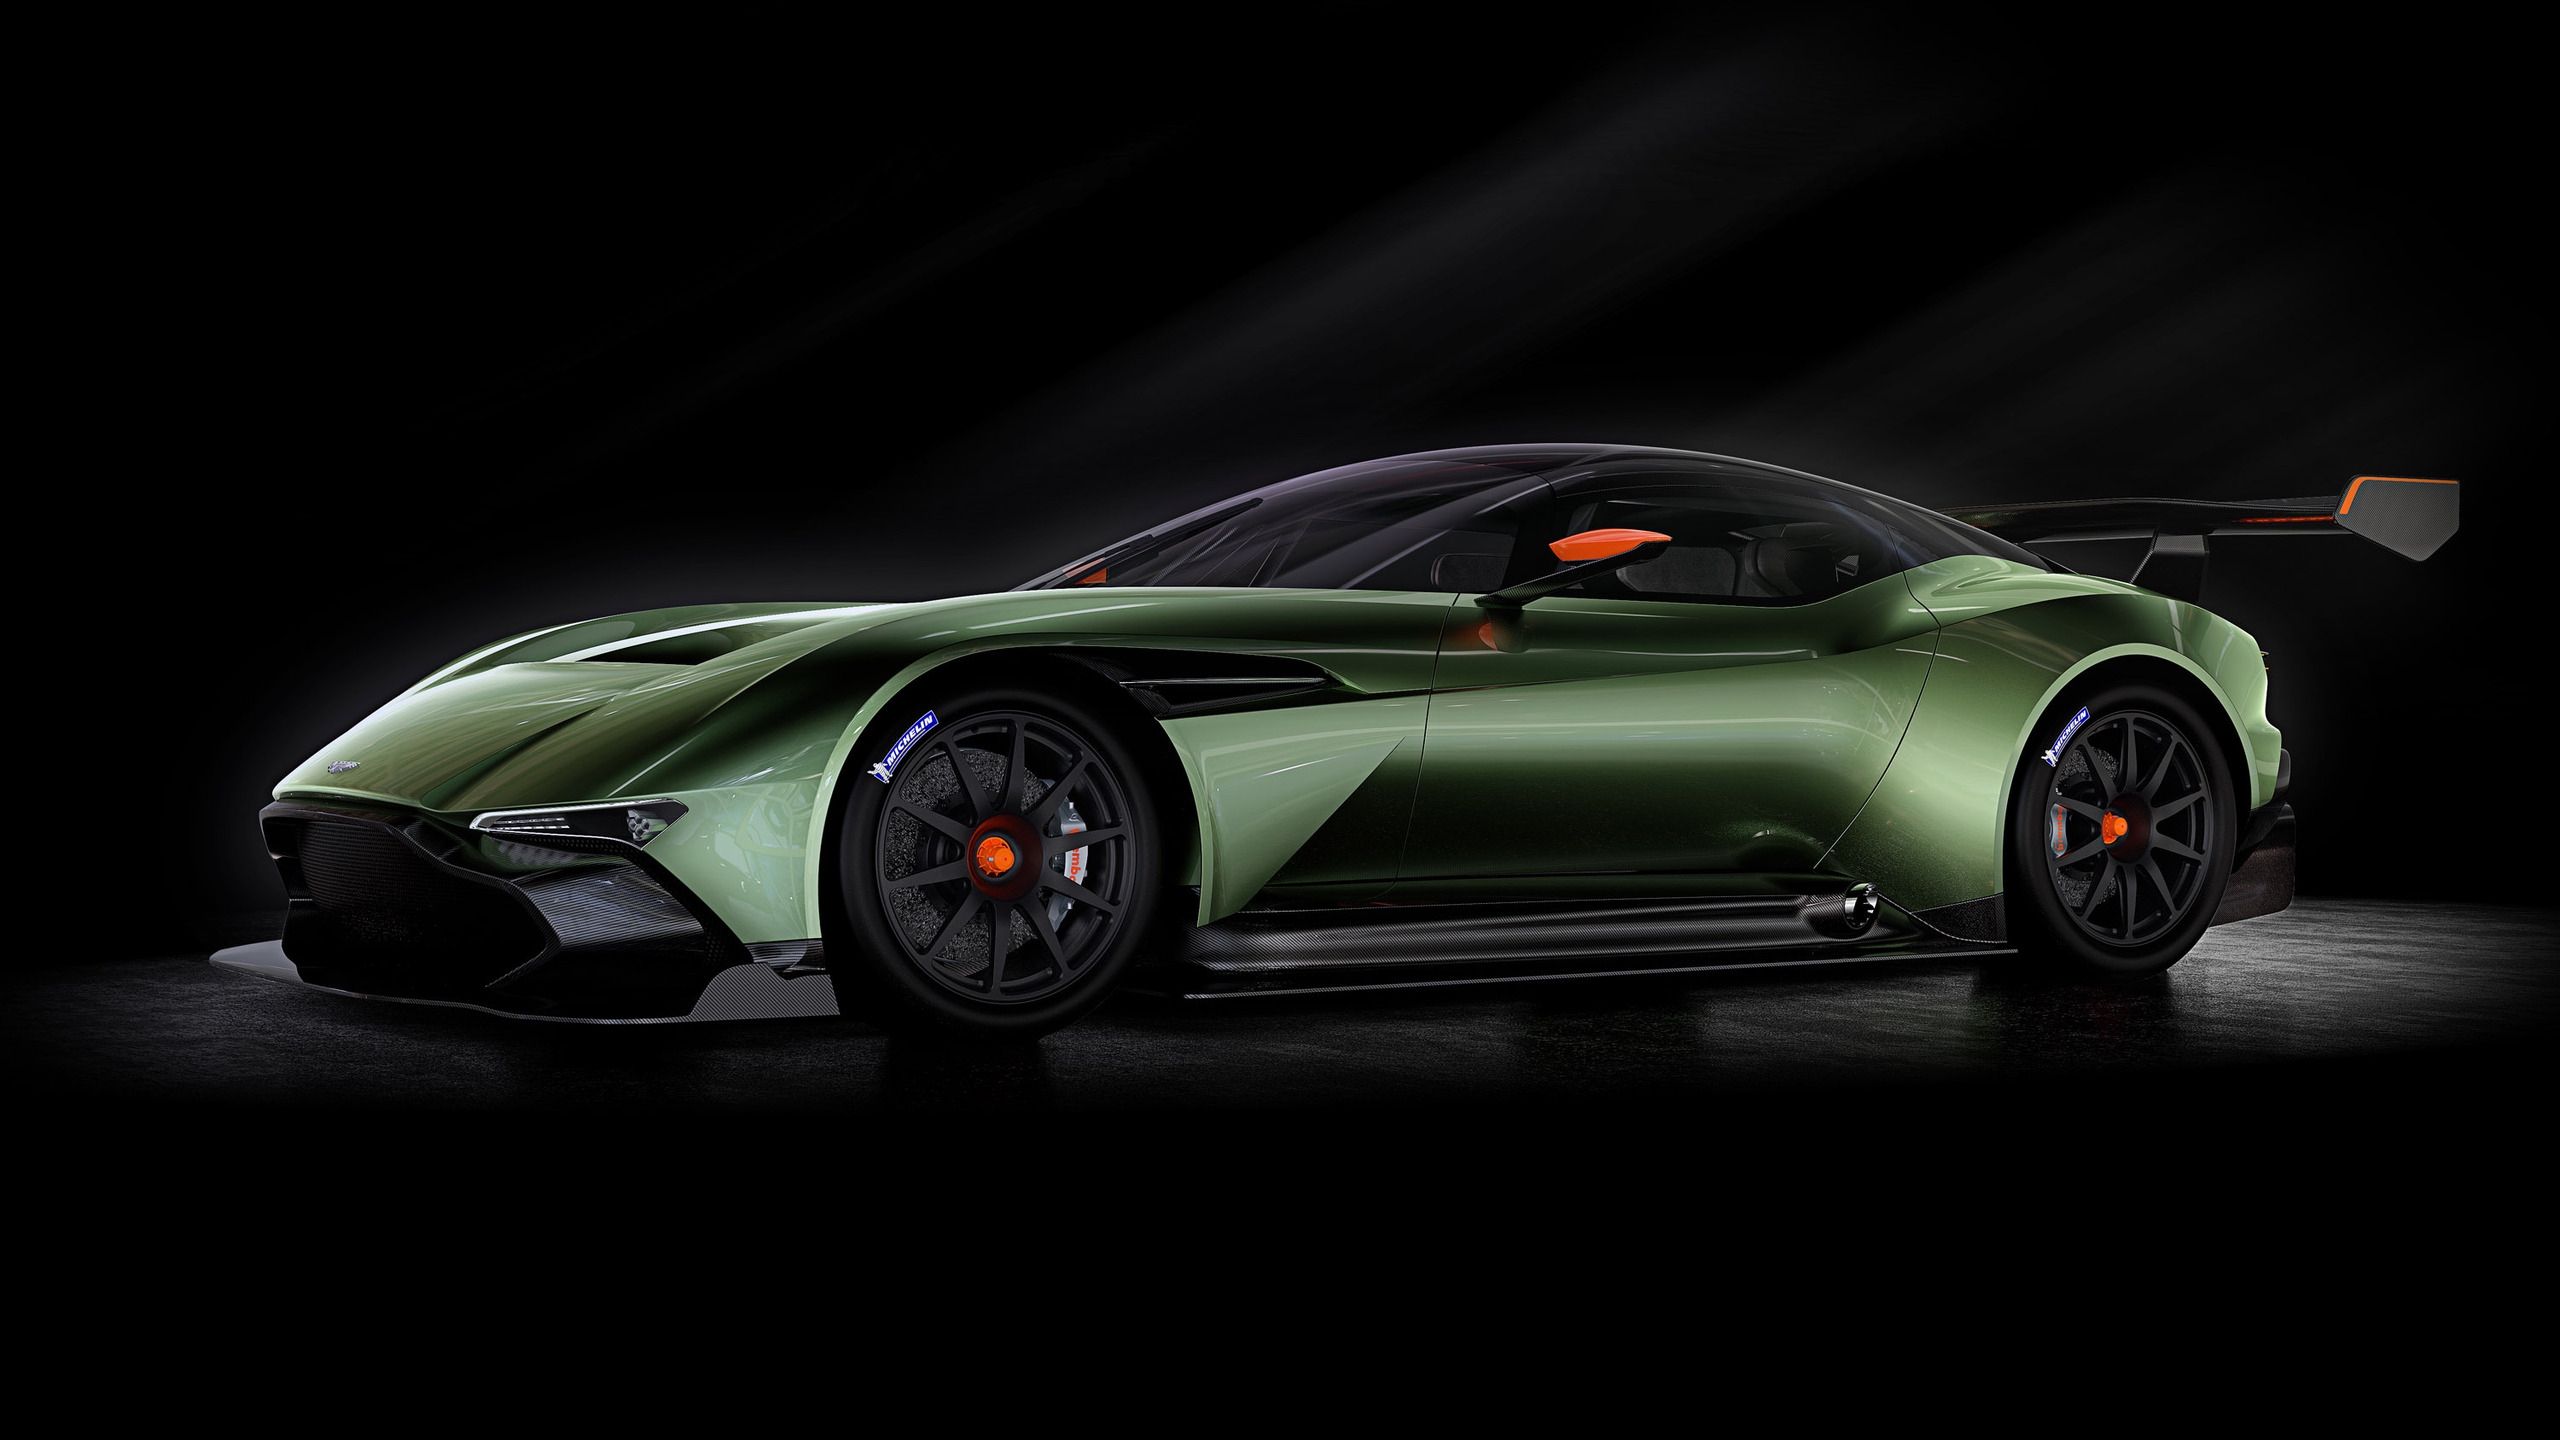 Aston Martin Vulcan Side for 2560x1440 HDTV resolution